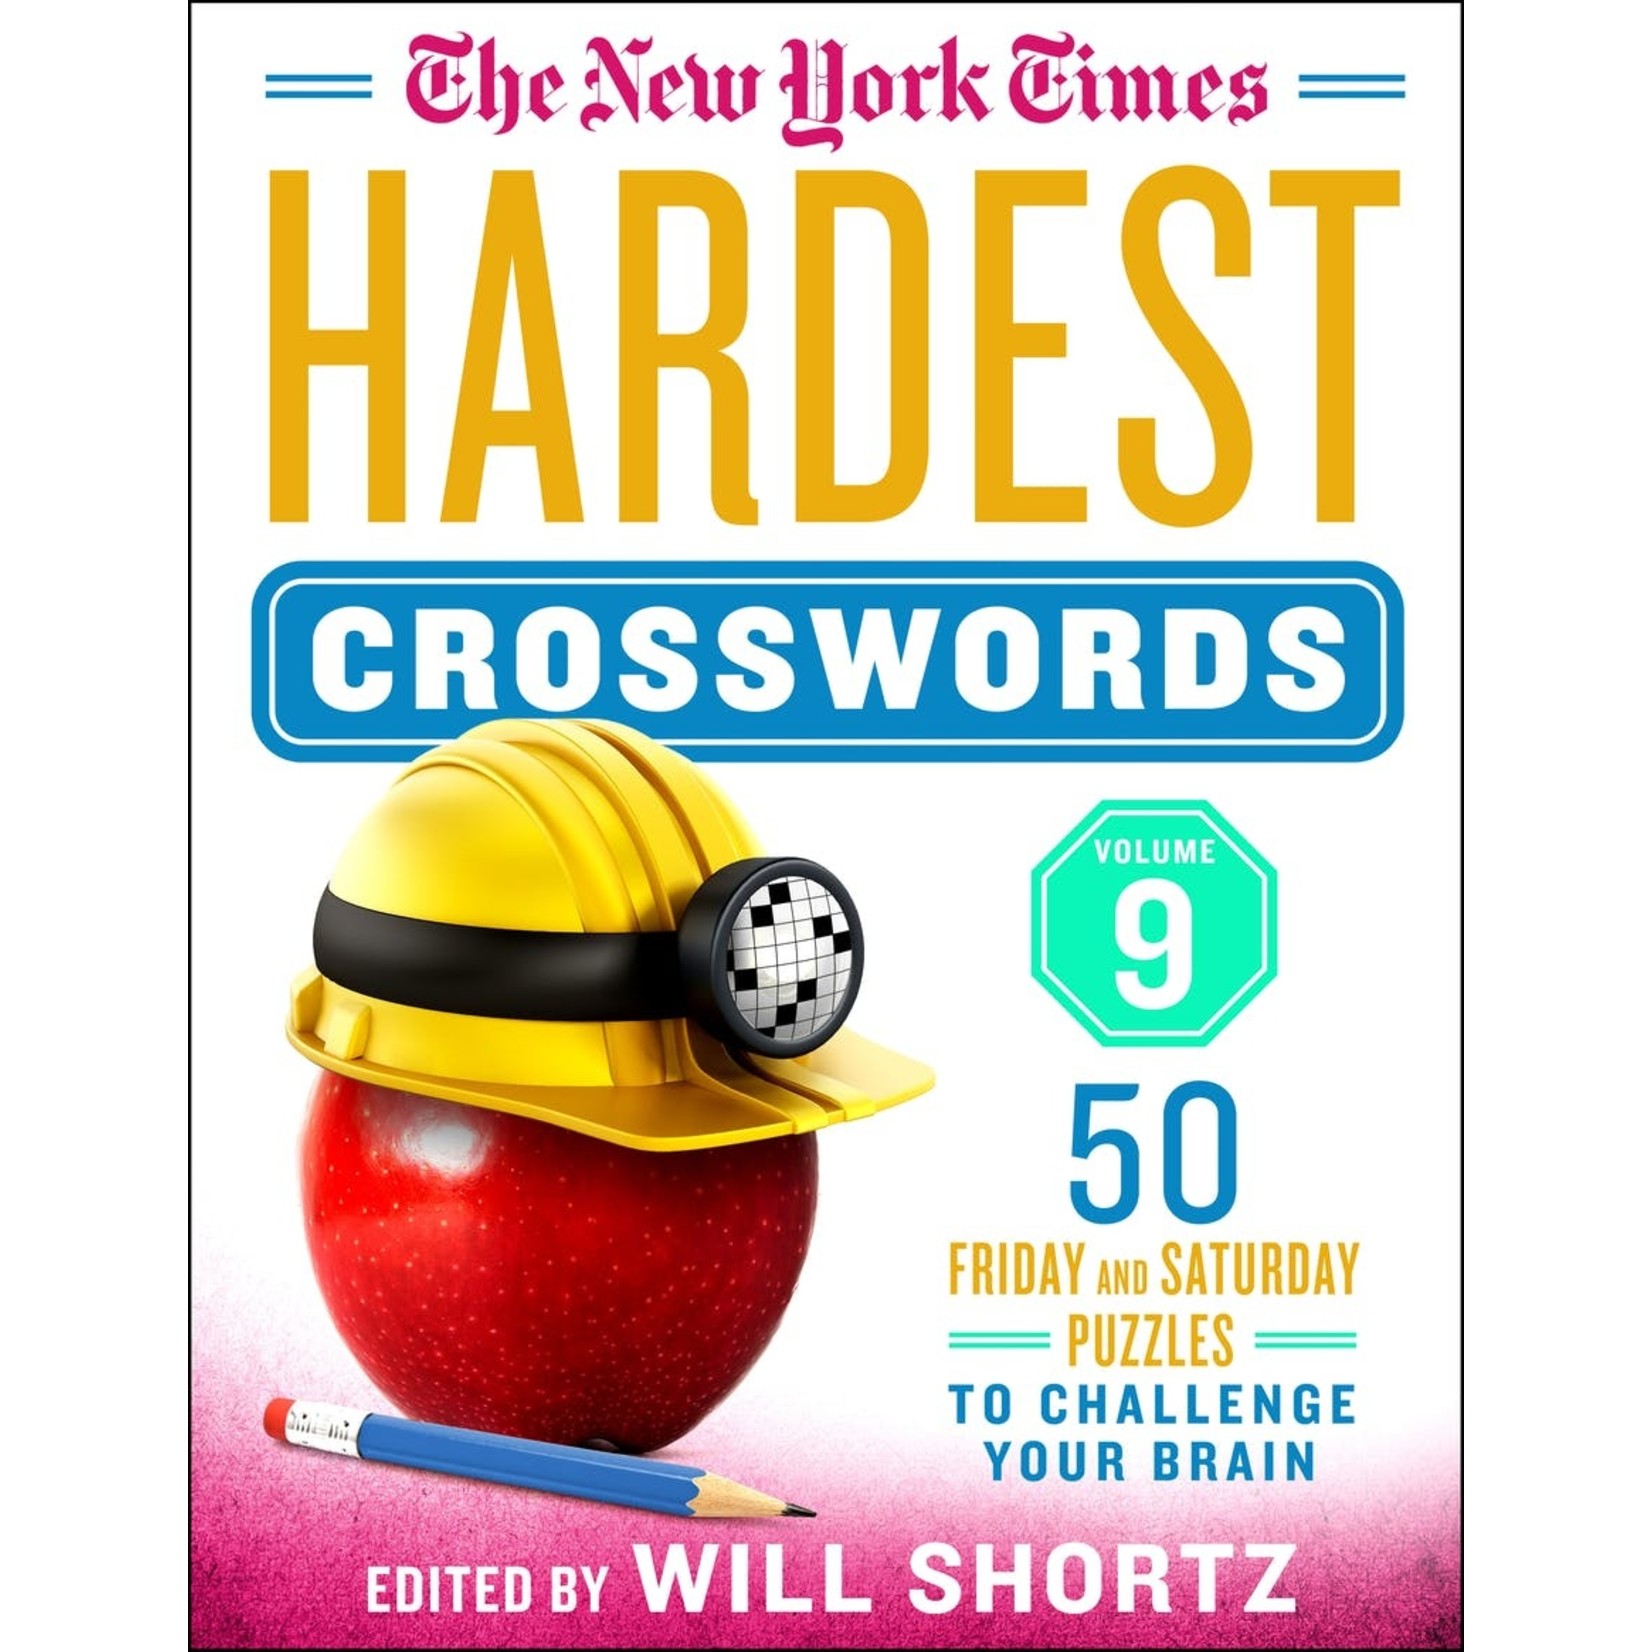 The New York Times The New York Times: Hardest Crosswords, Volume 9